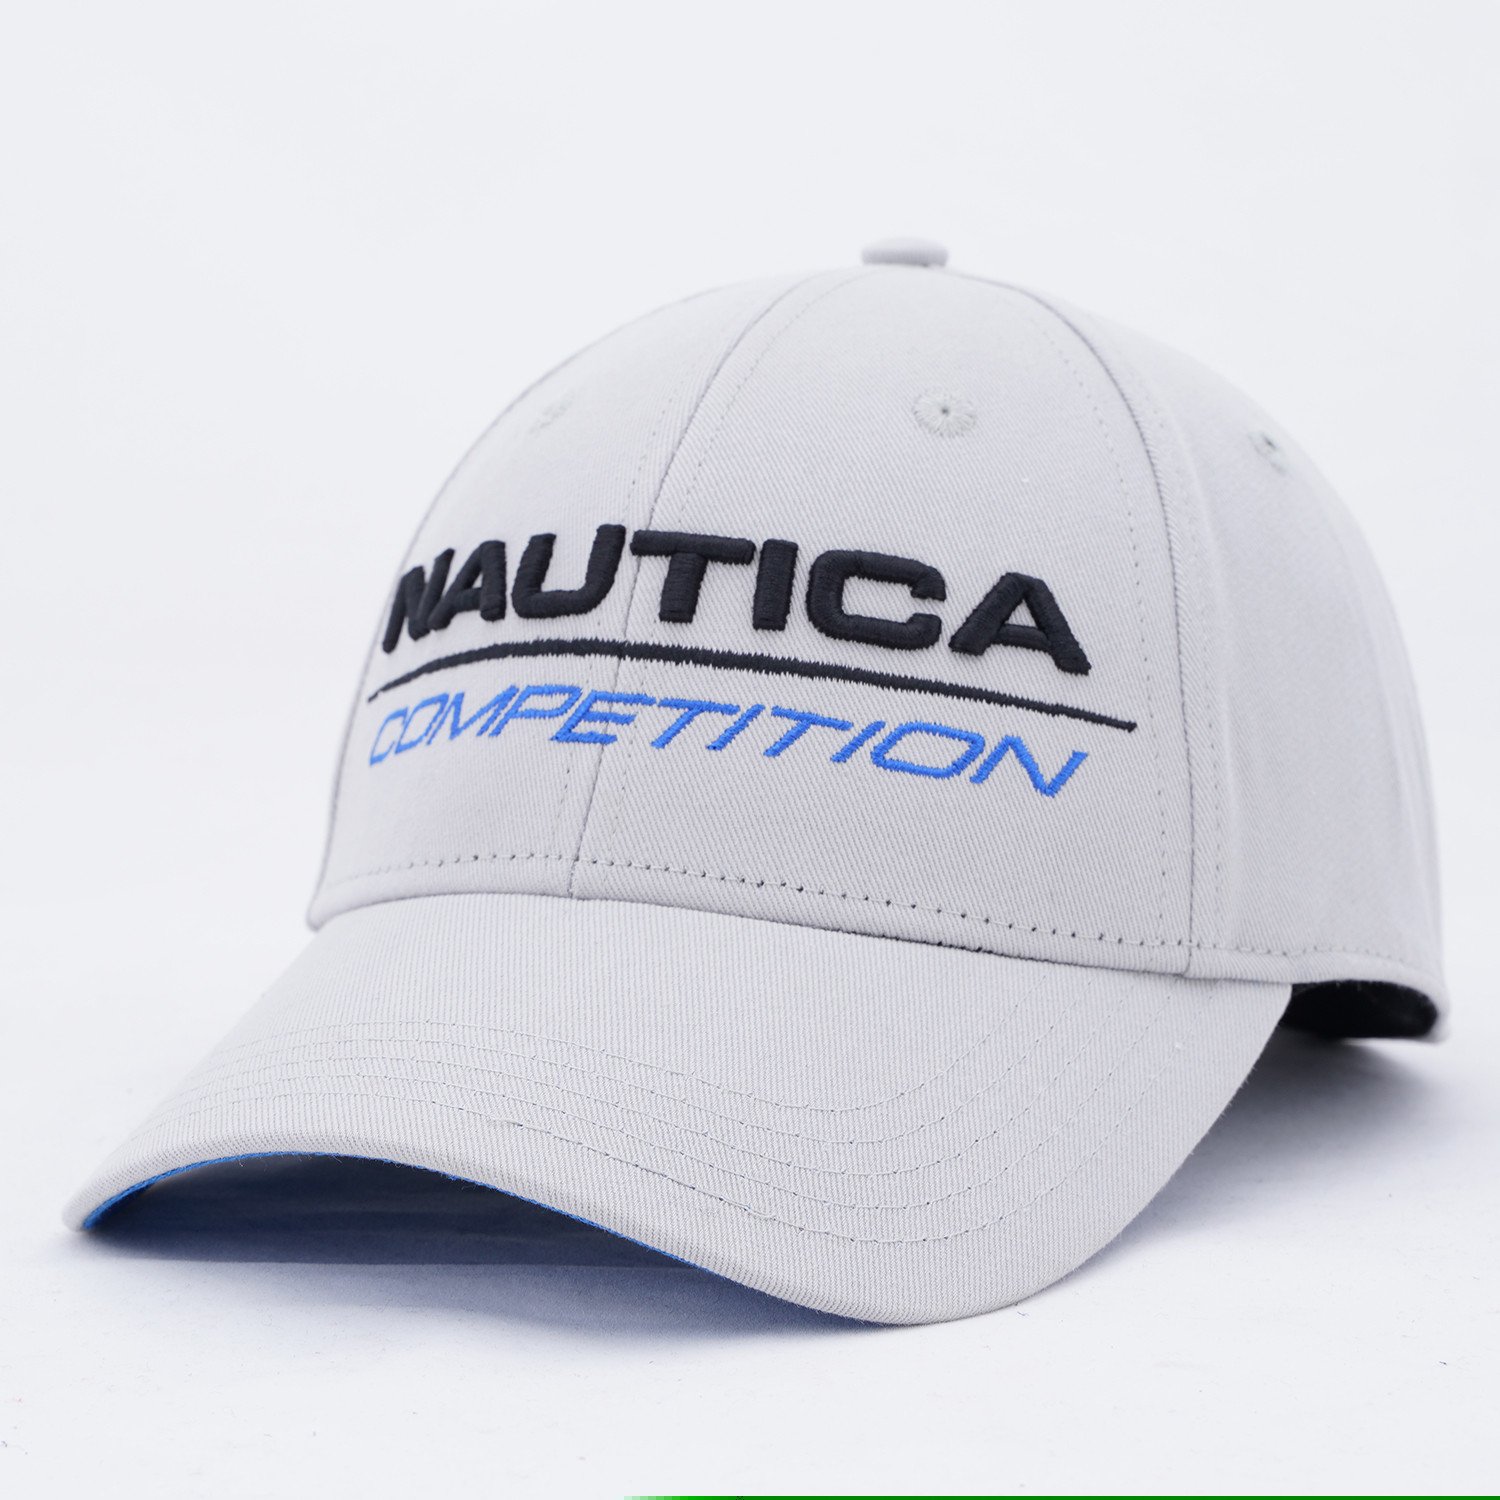 Nautica Competition Tappa Ανδρικό Καπέλο (9000090836_1730)